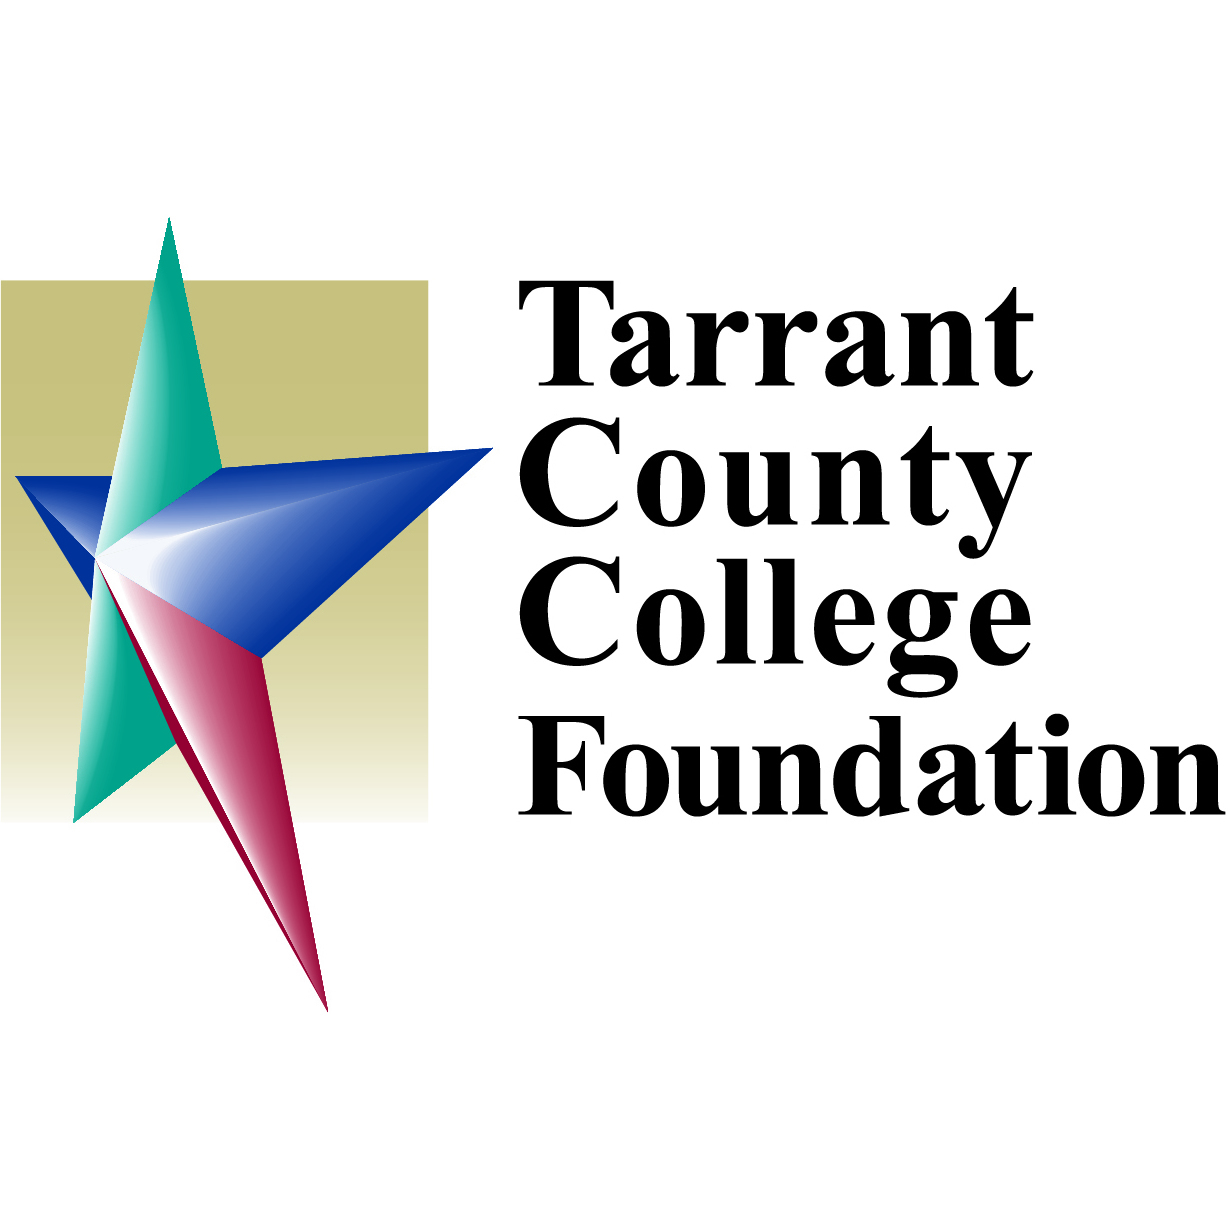 TCCF Logo Square.jpg